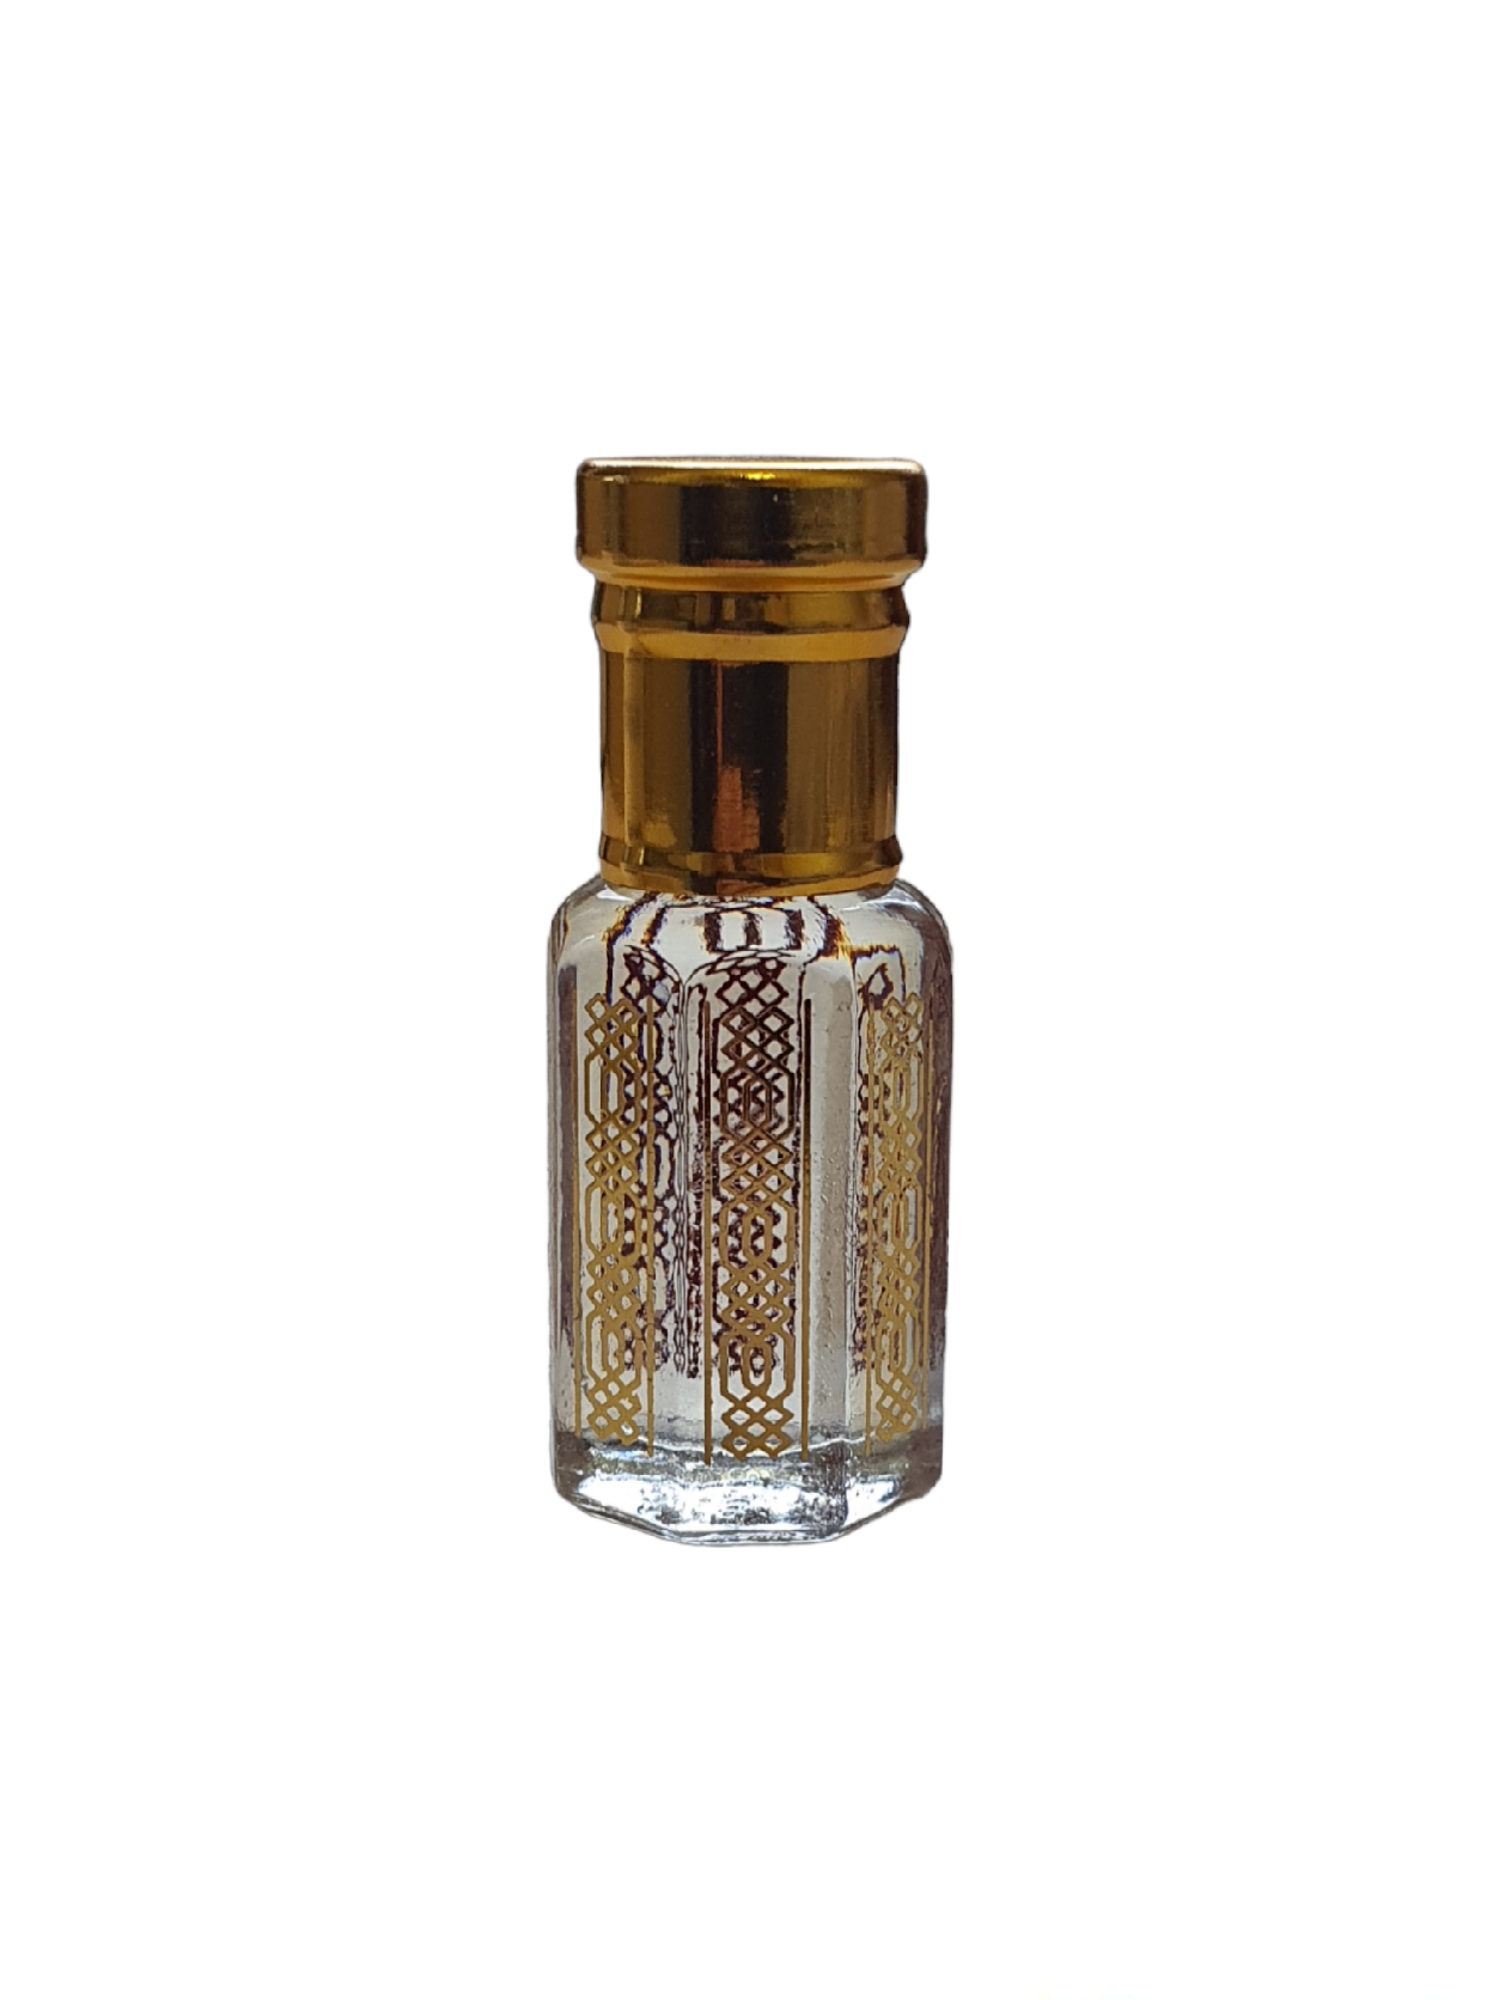 Black oud Oil -  EDP/EDT/Parfum inspired dupe oud oil by Essential Oud 6ml/12ml